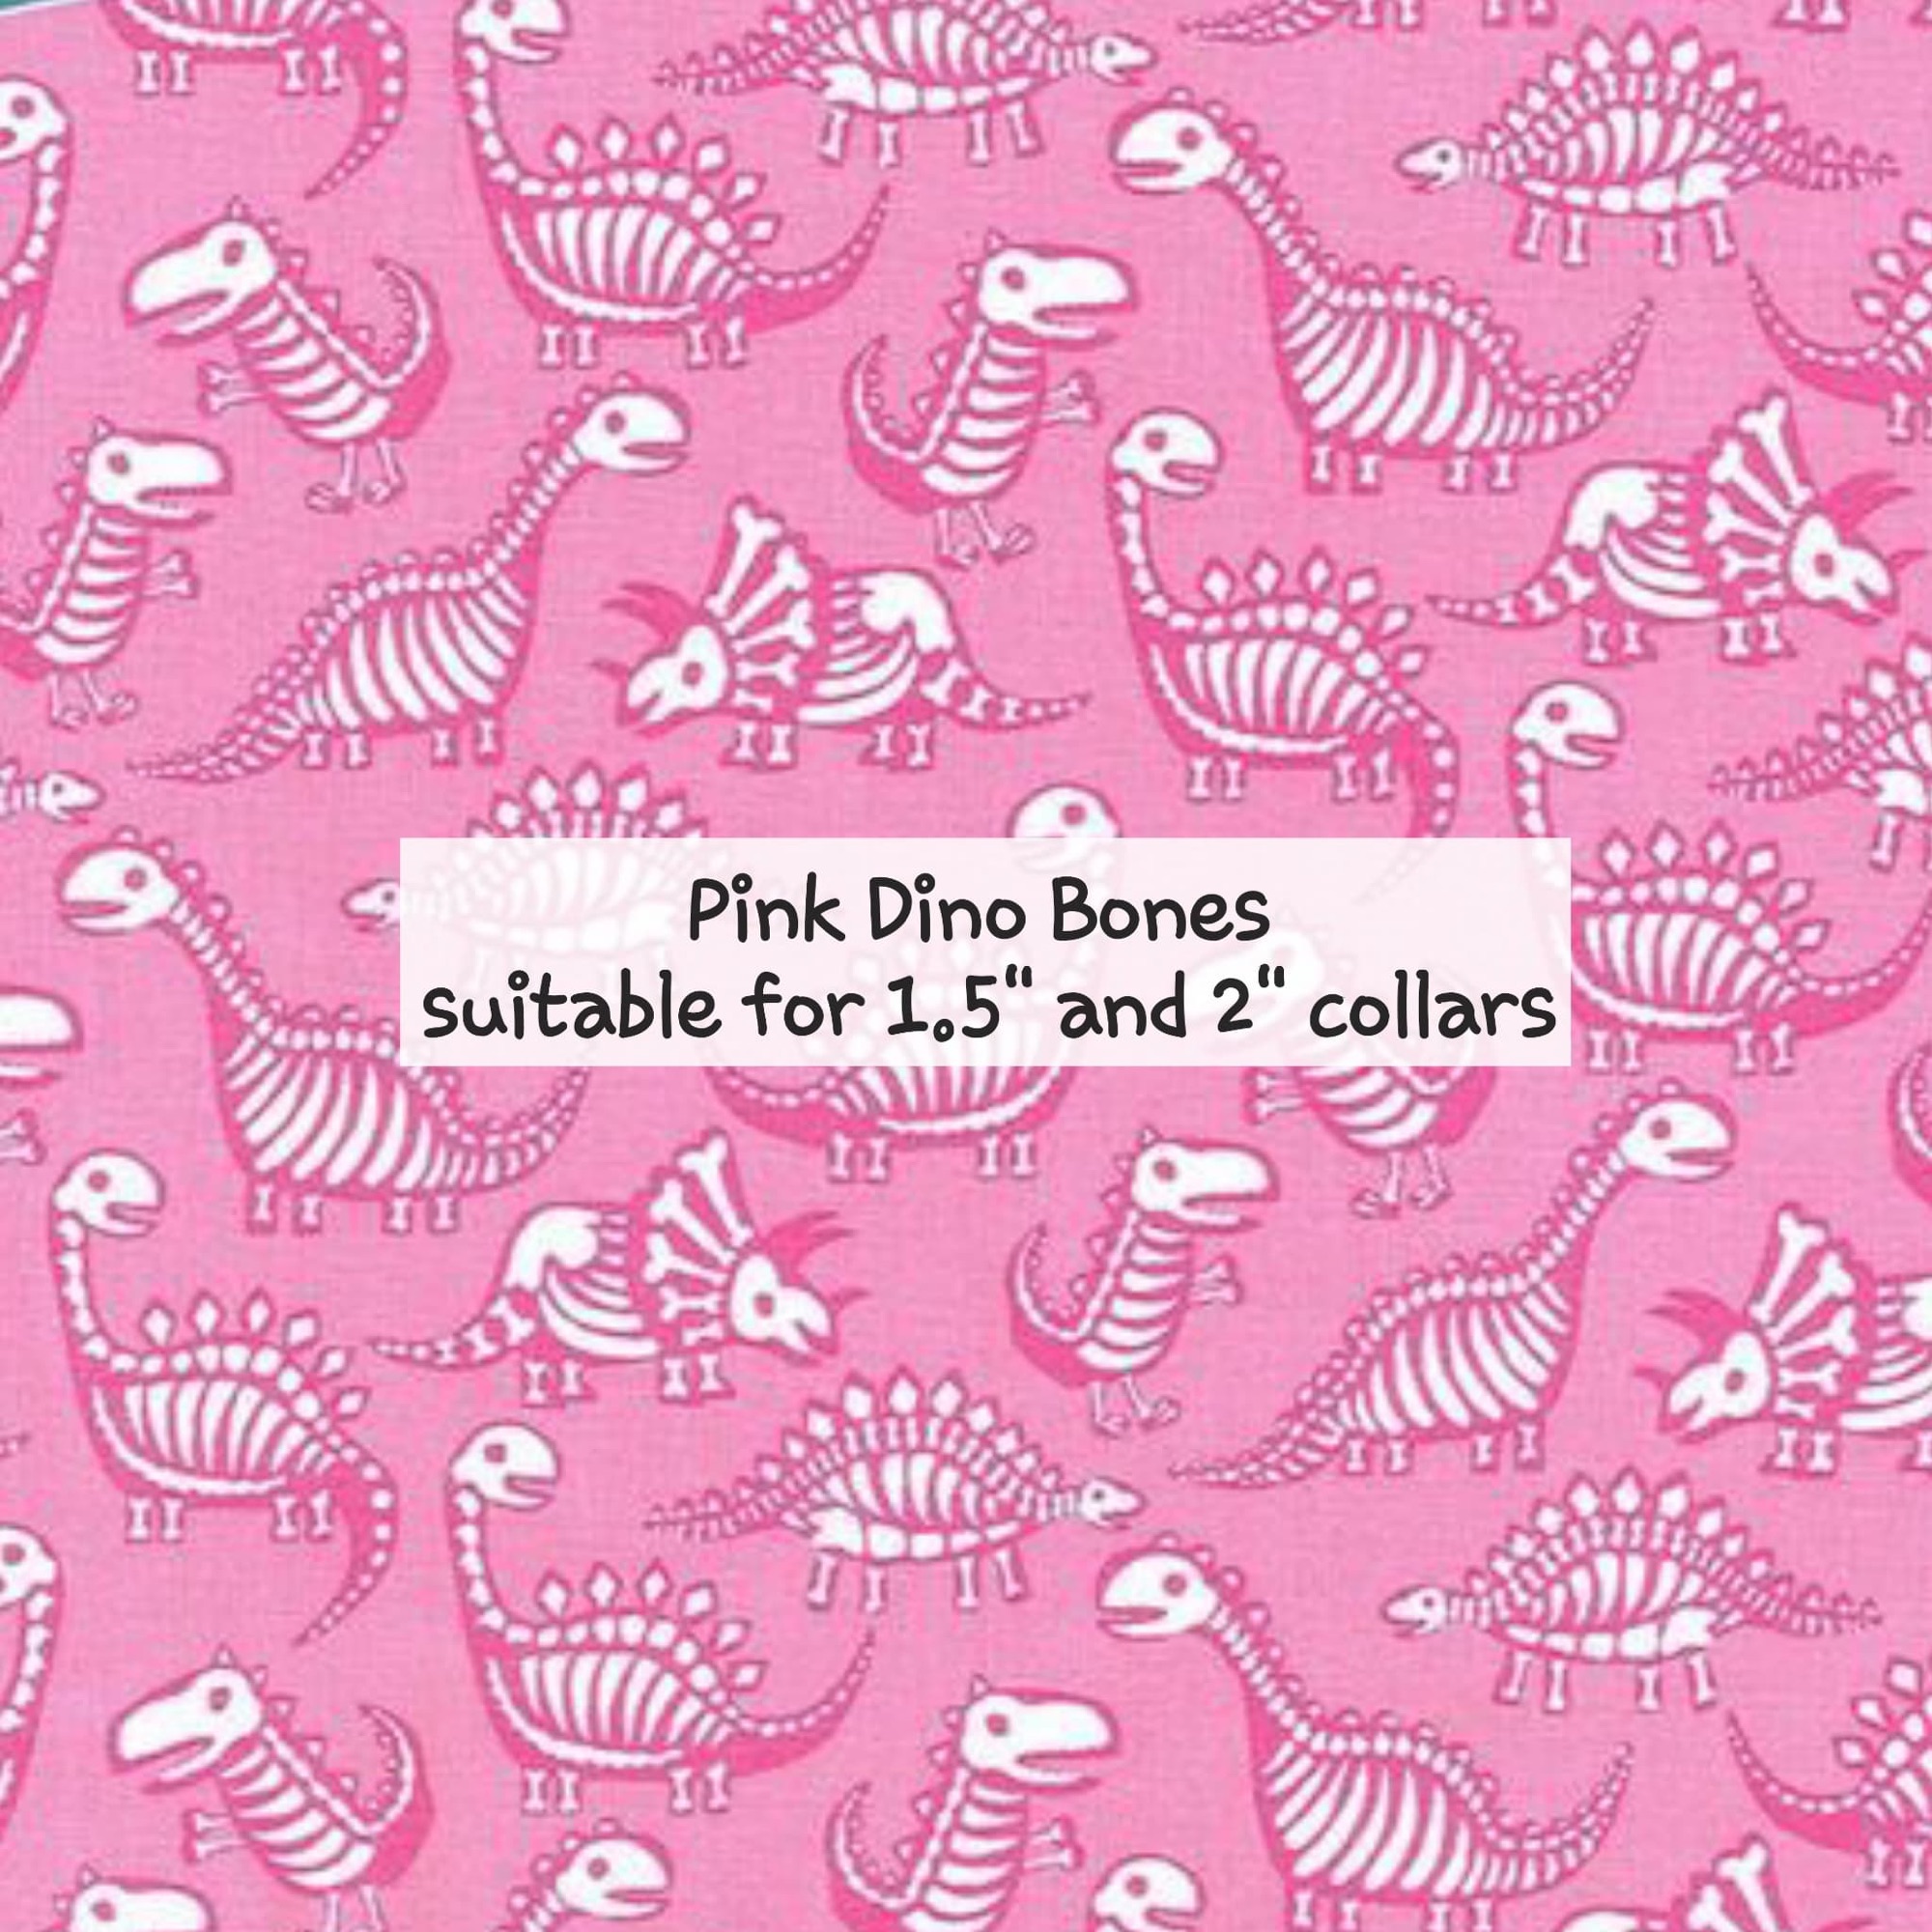 Pink Dino Bones